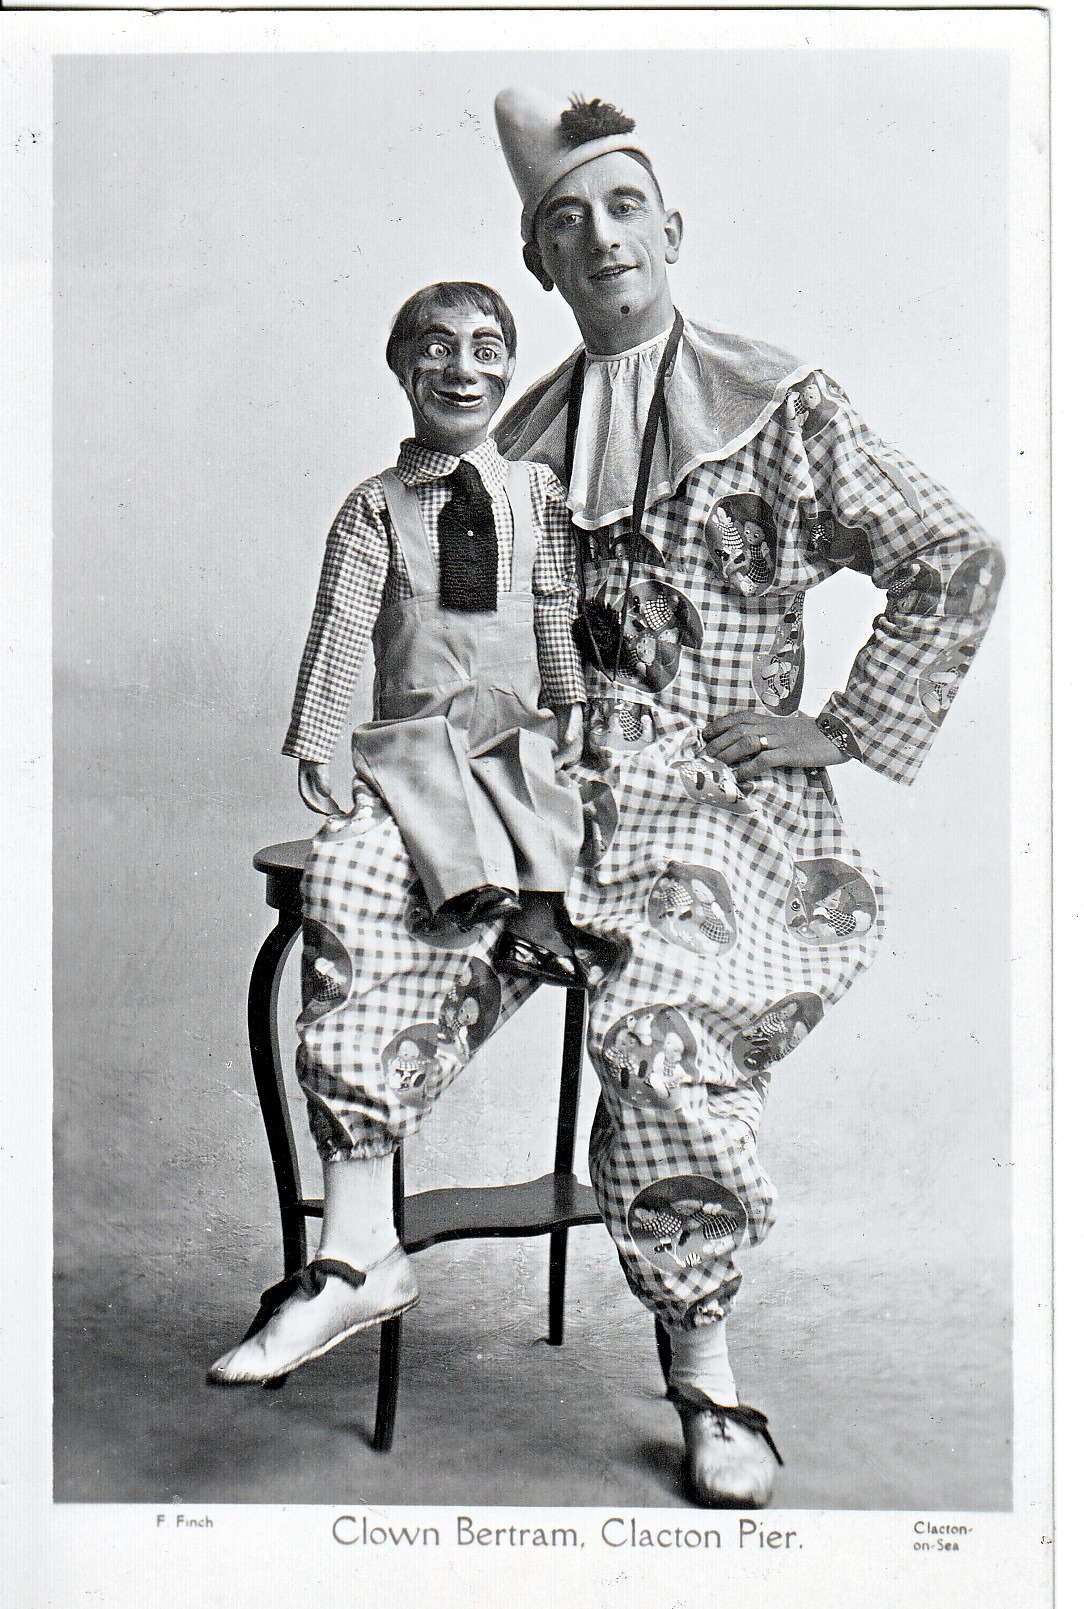 Clown Bertram from the 1930's